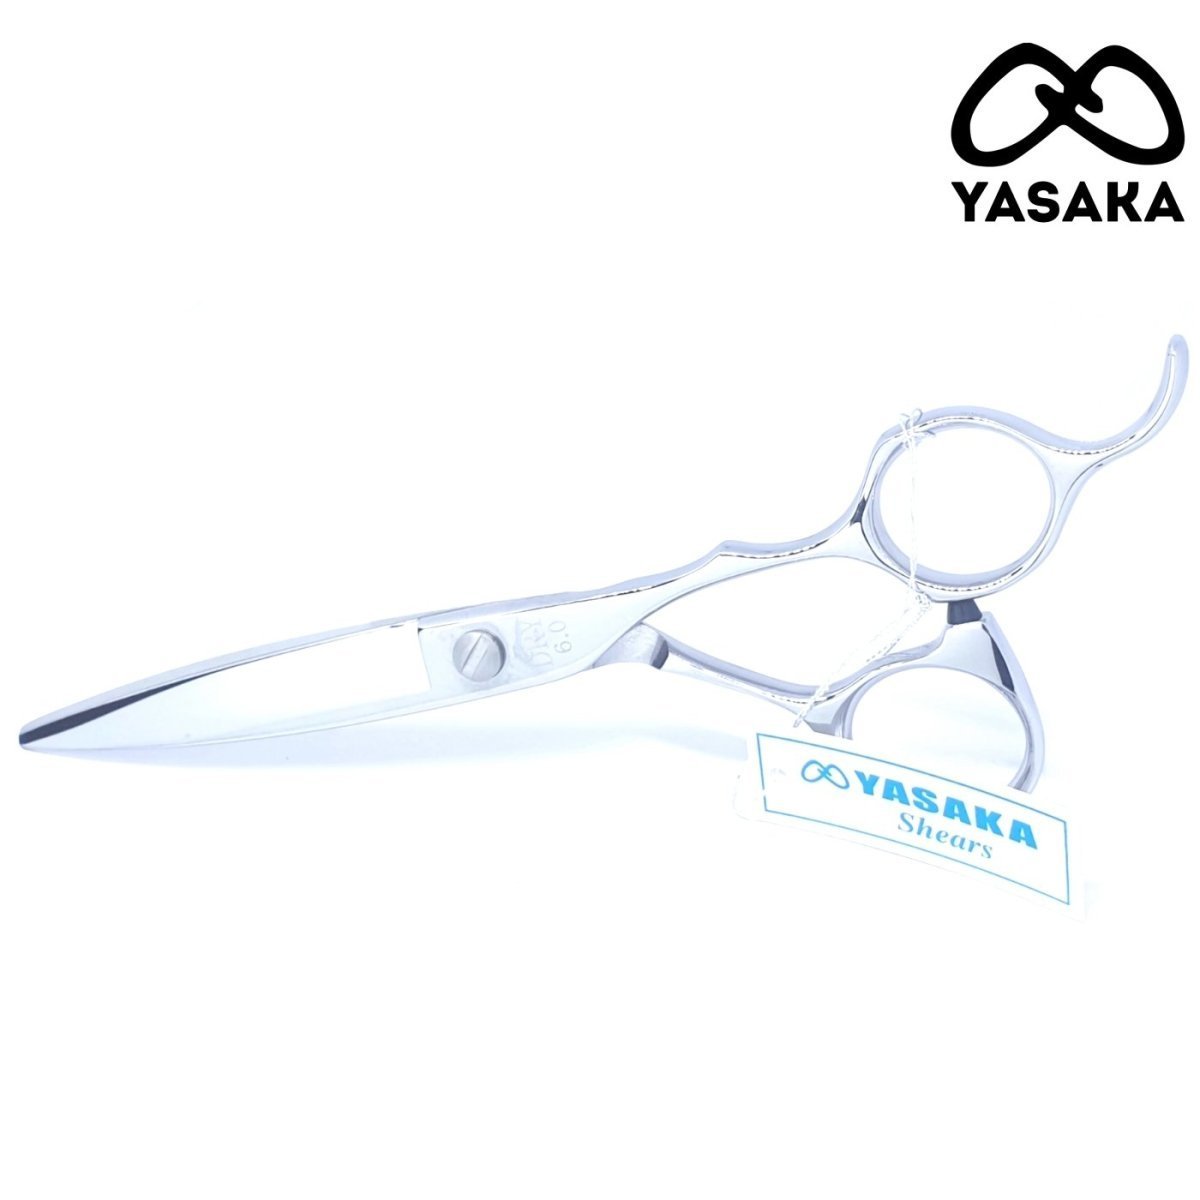 Yasaka Dry Cut Hair Cutting Scissors - Japan Scissors USA